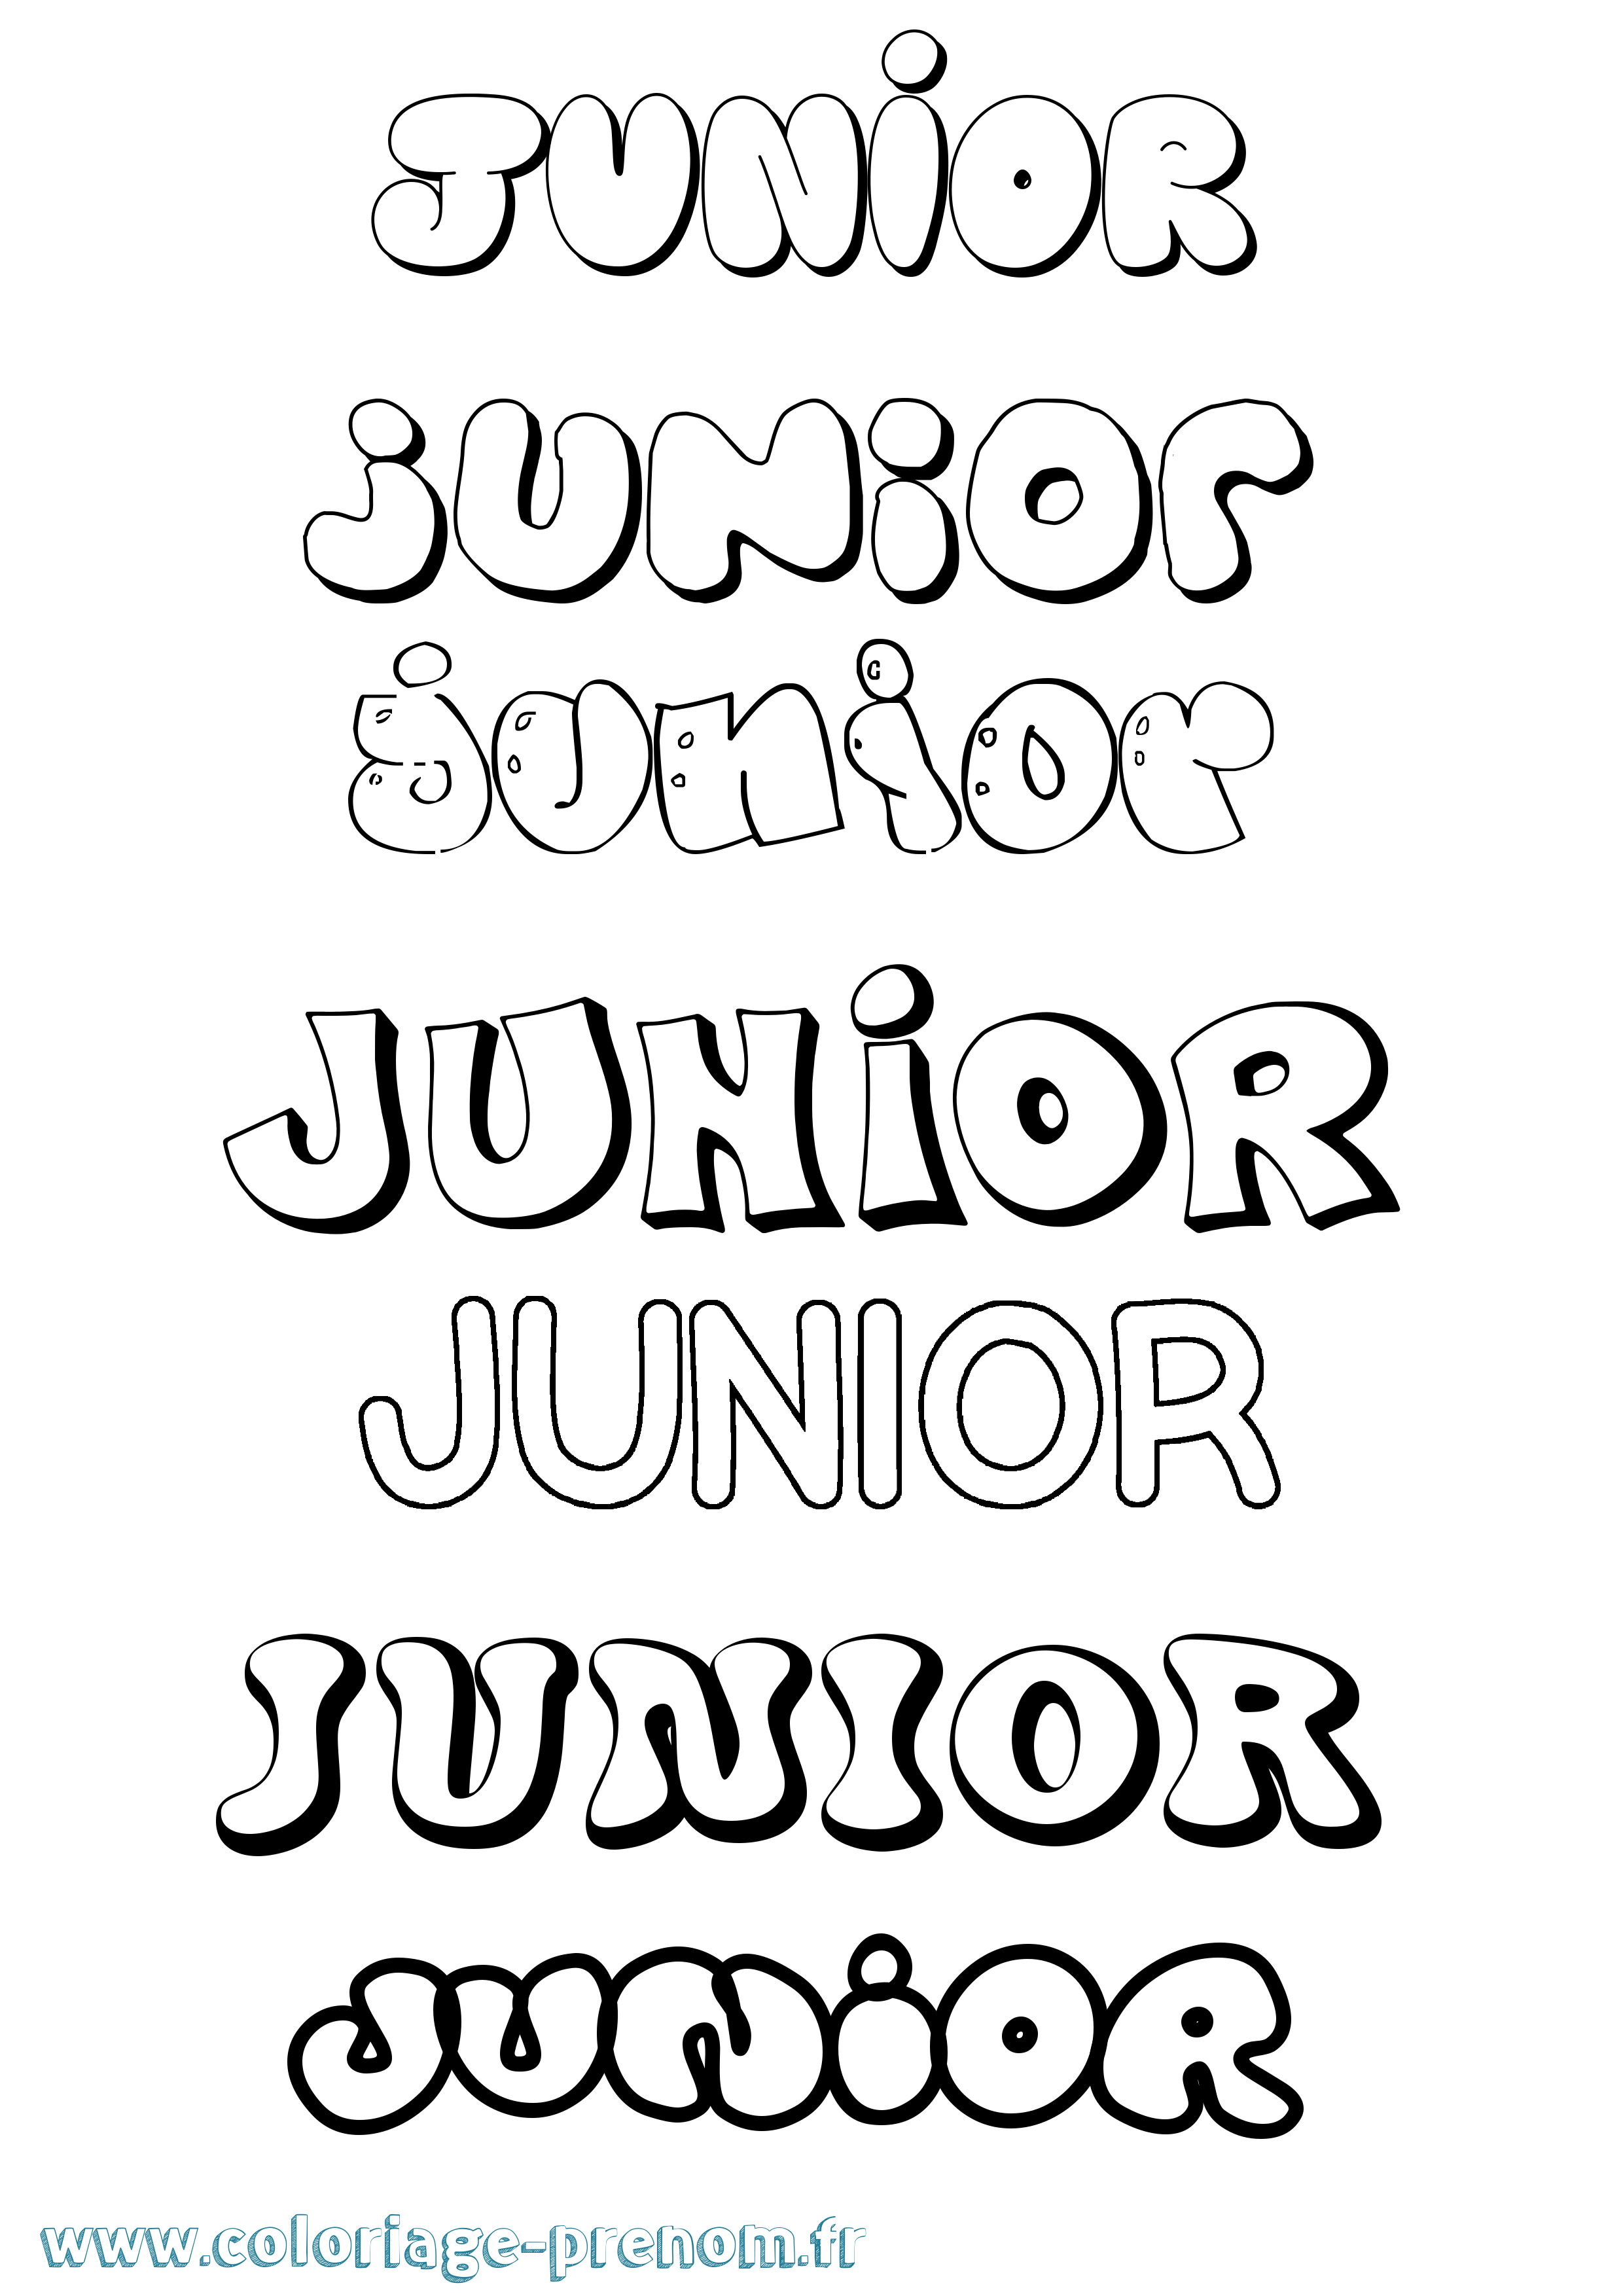 Coloriage prénom Junior Bubble